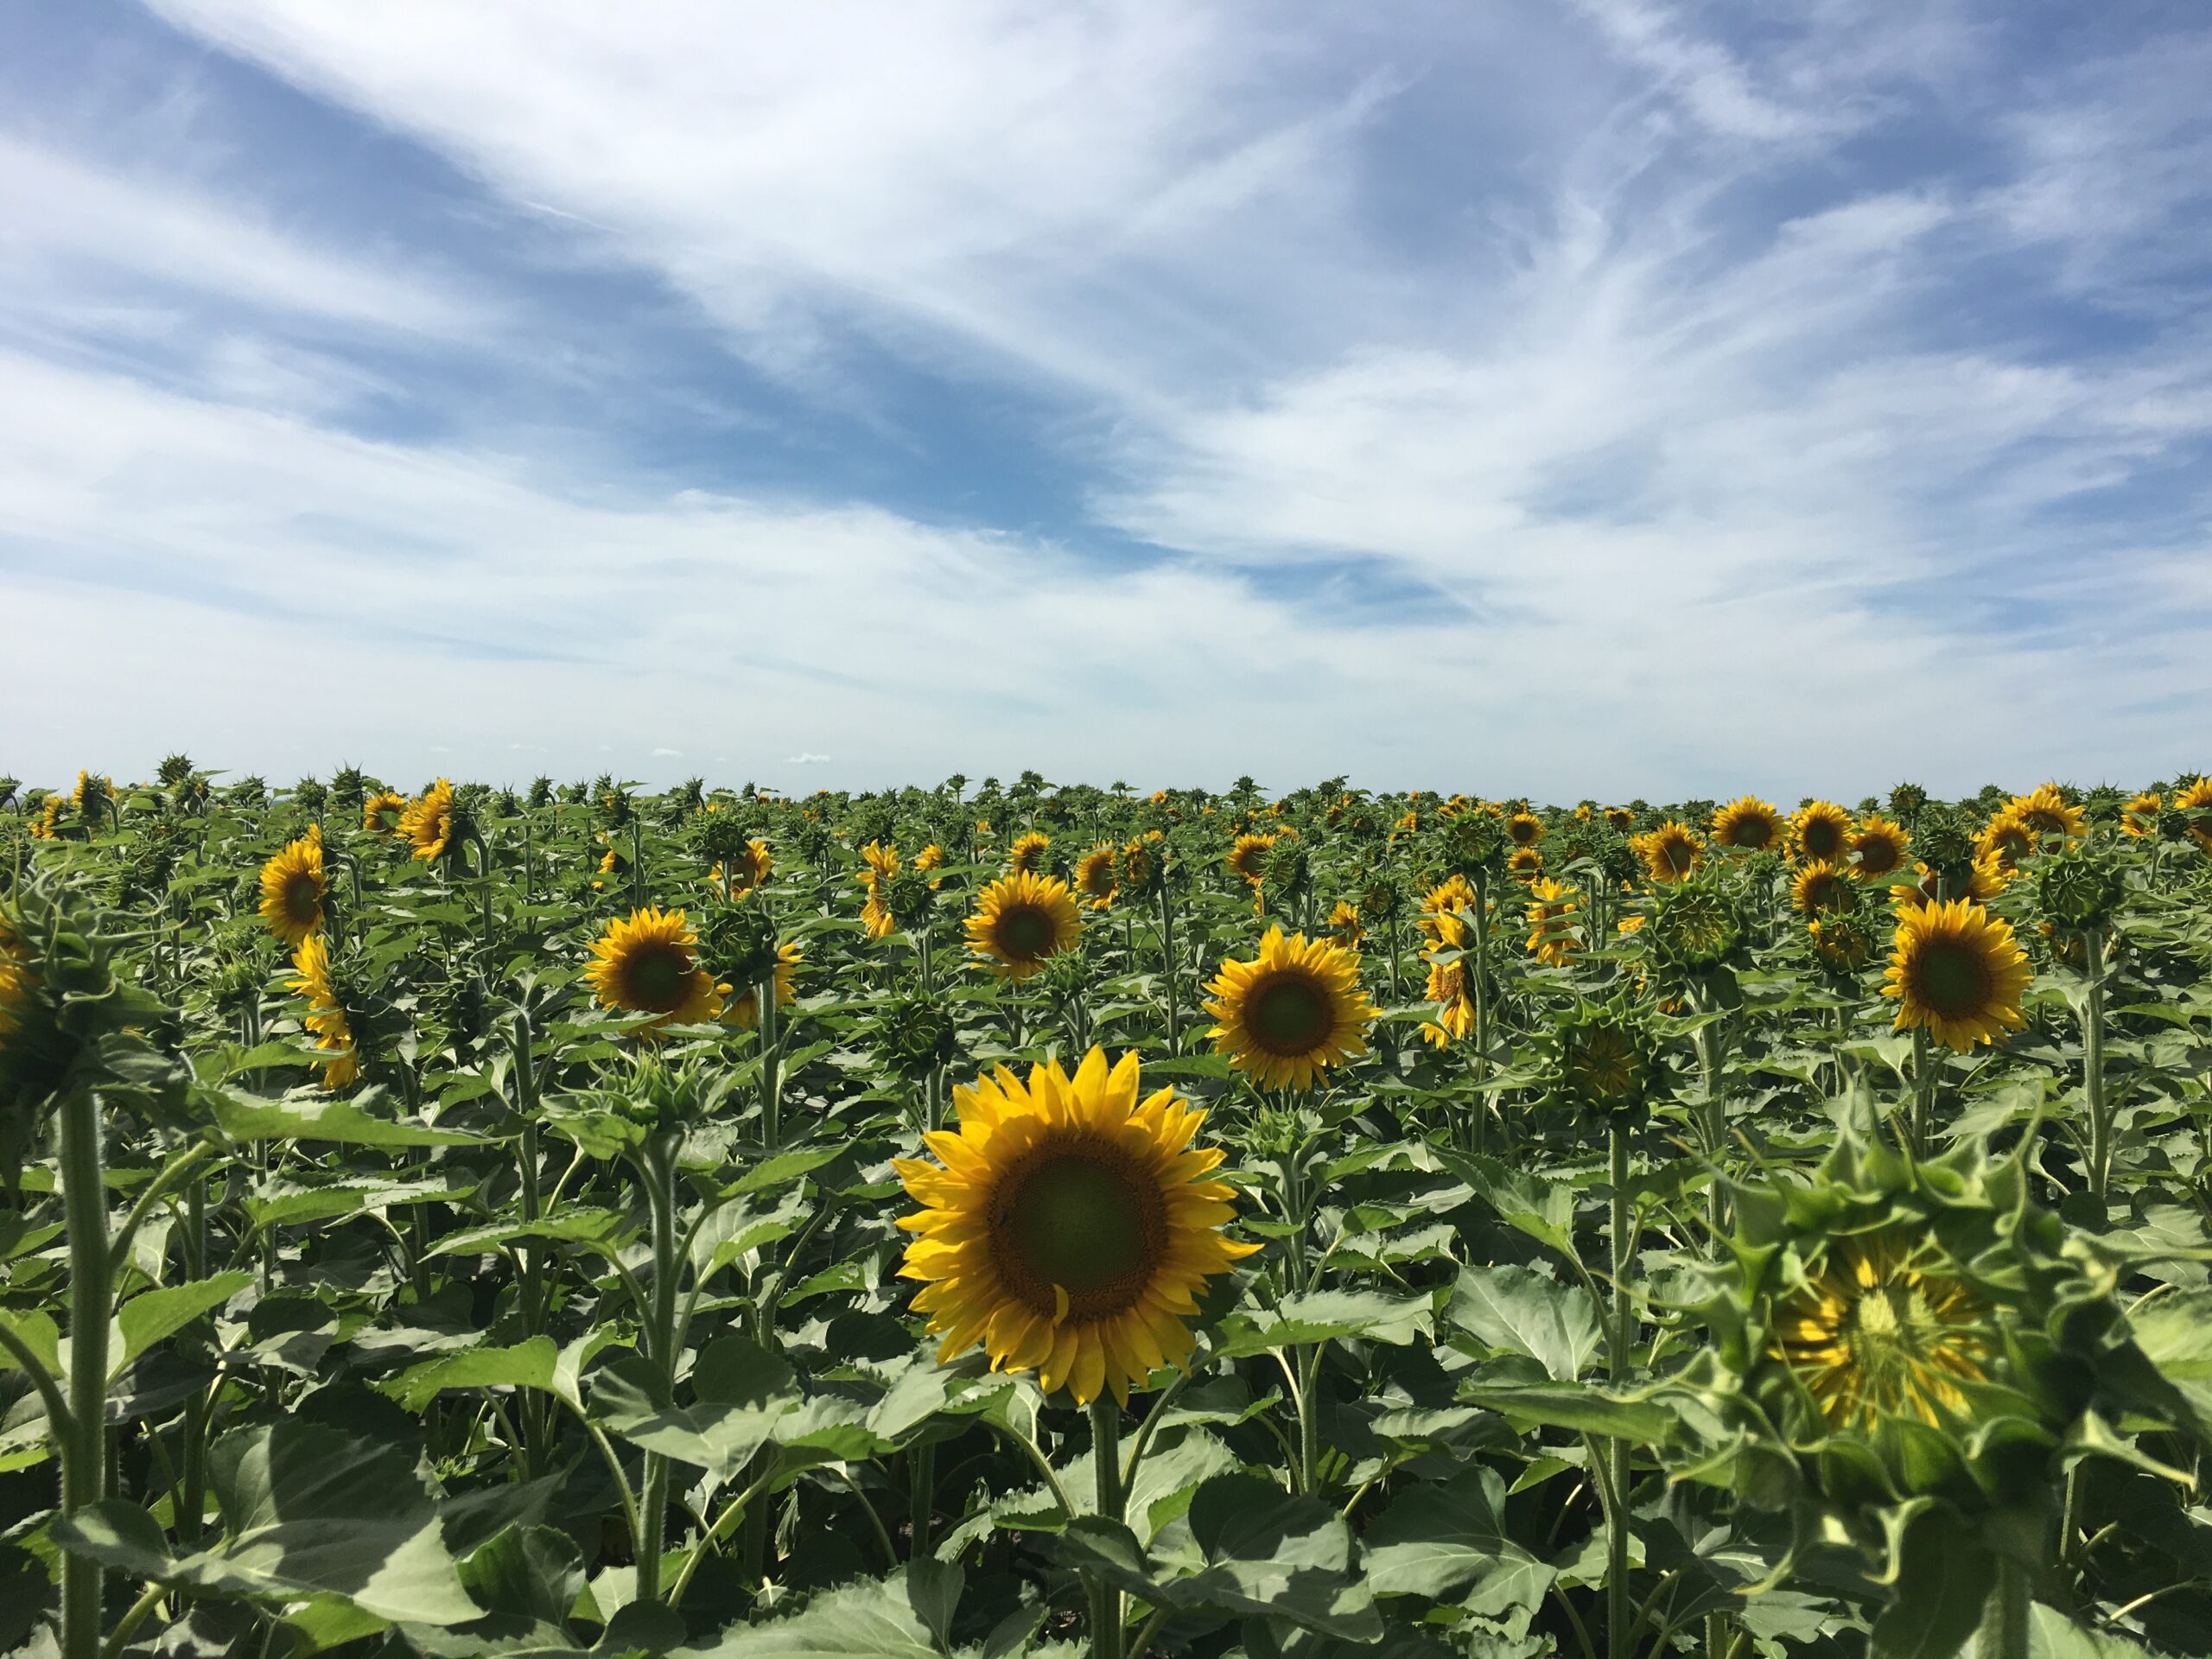 Development of long-type confection sunflower hybrids